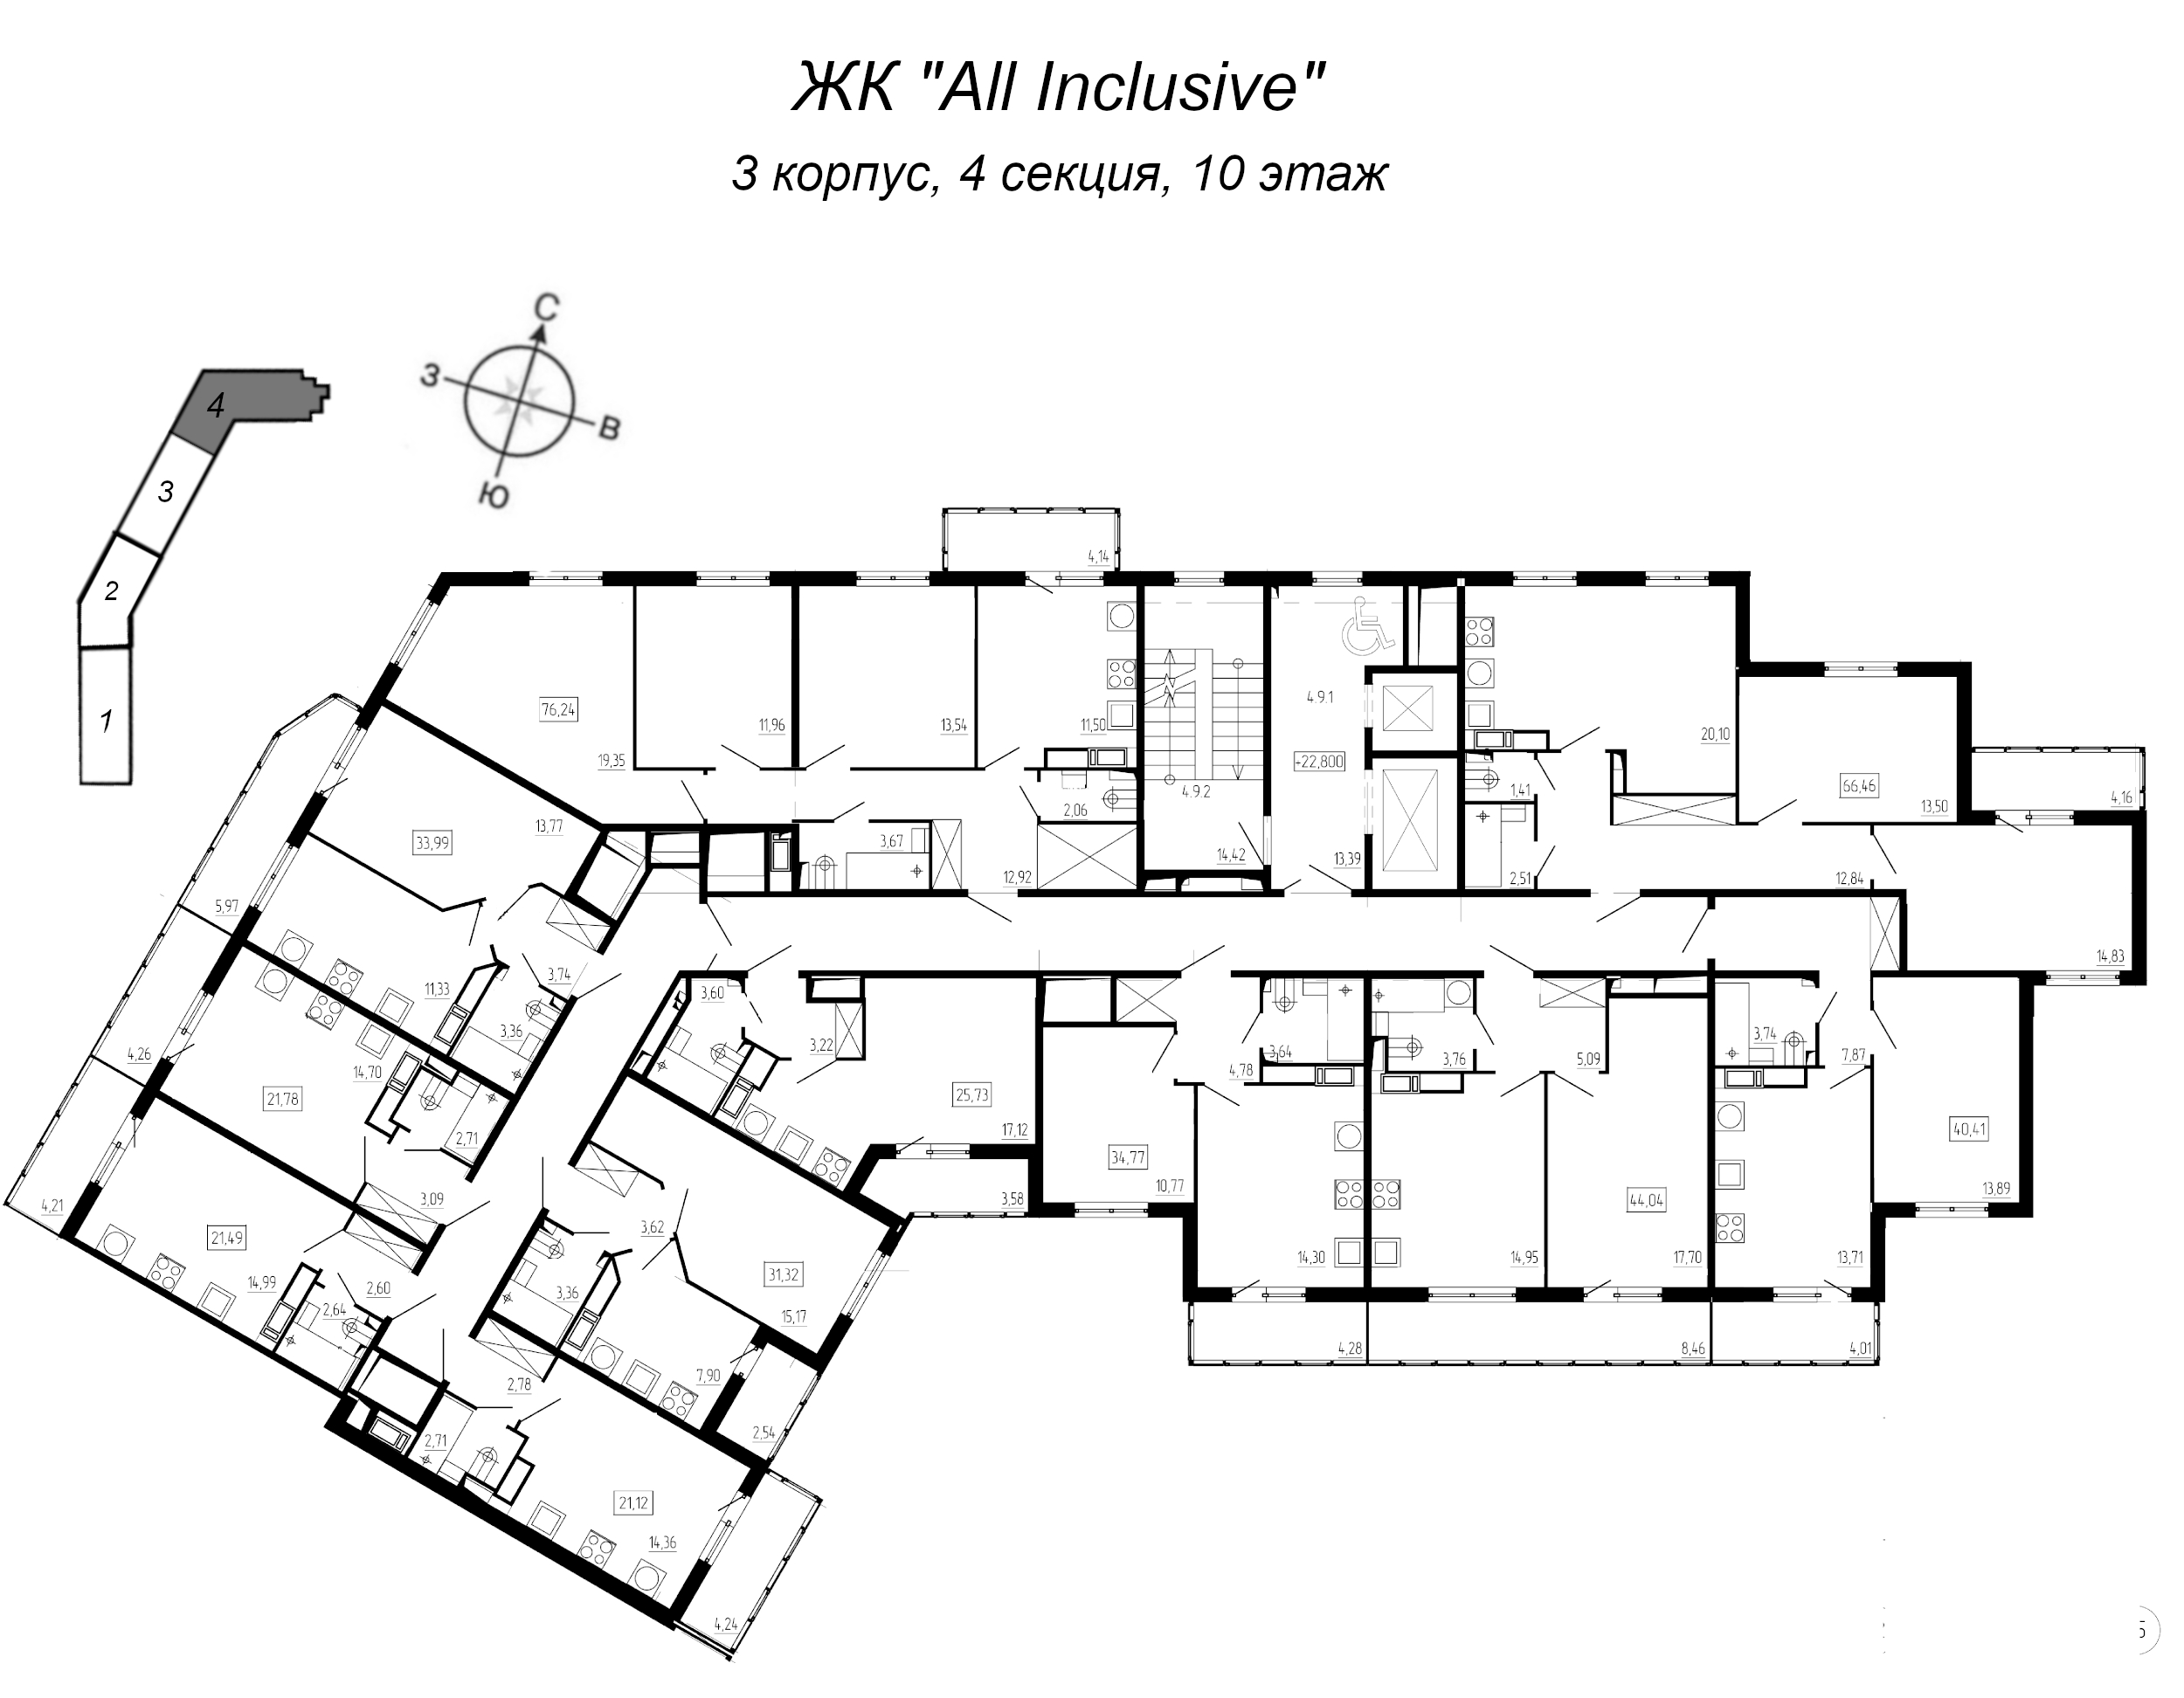 2-комнатная (Евро) квартира, 34.77 м² в ЖК "All Inclusive" - планировка этажа